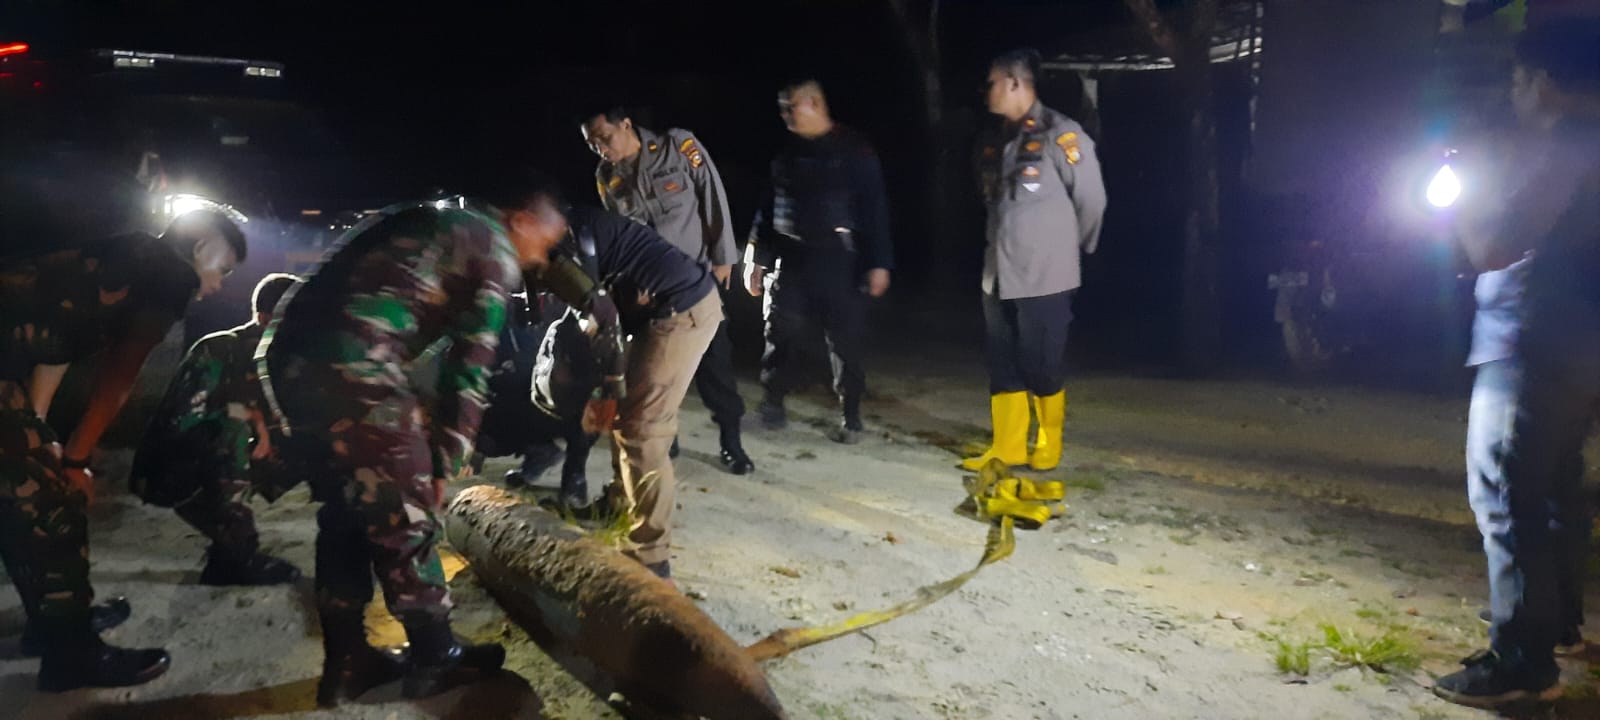 Warga Temukan Mortir Aktif di Sungai Penampuan Tenayan Raya 